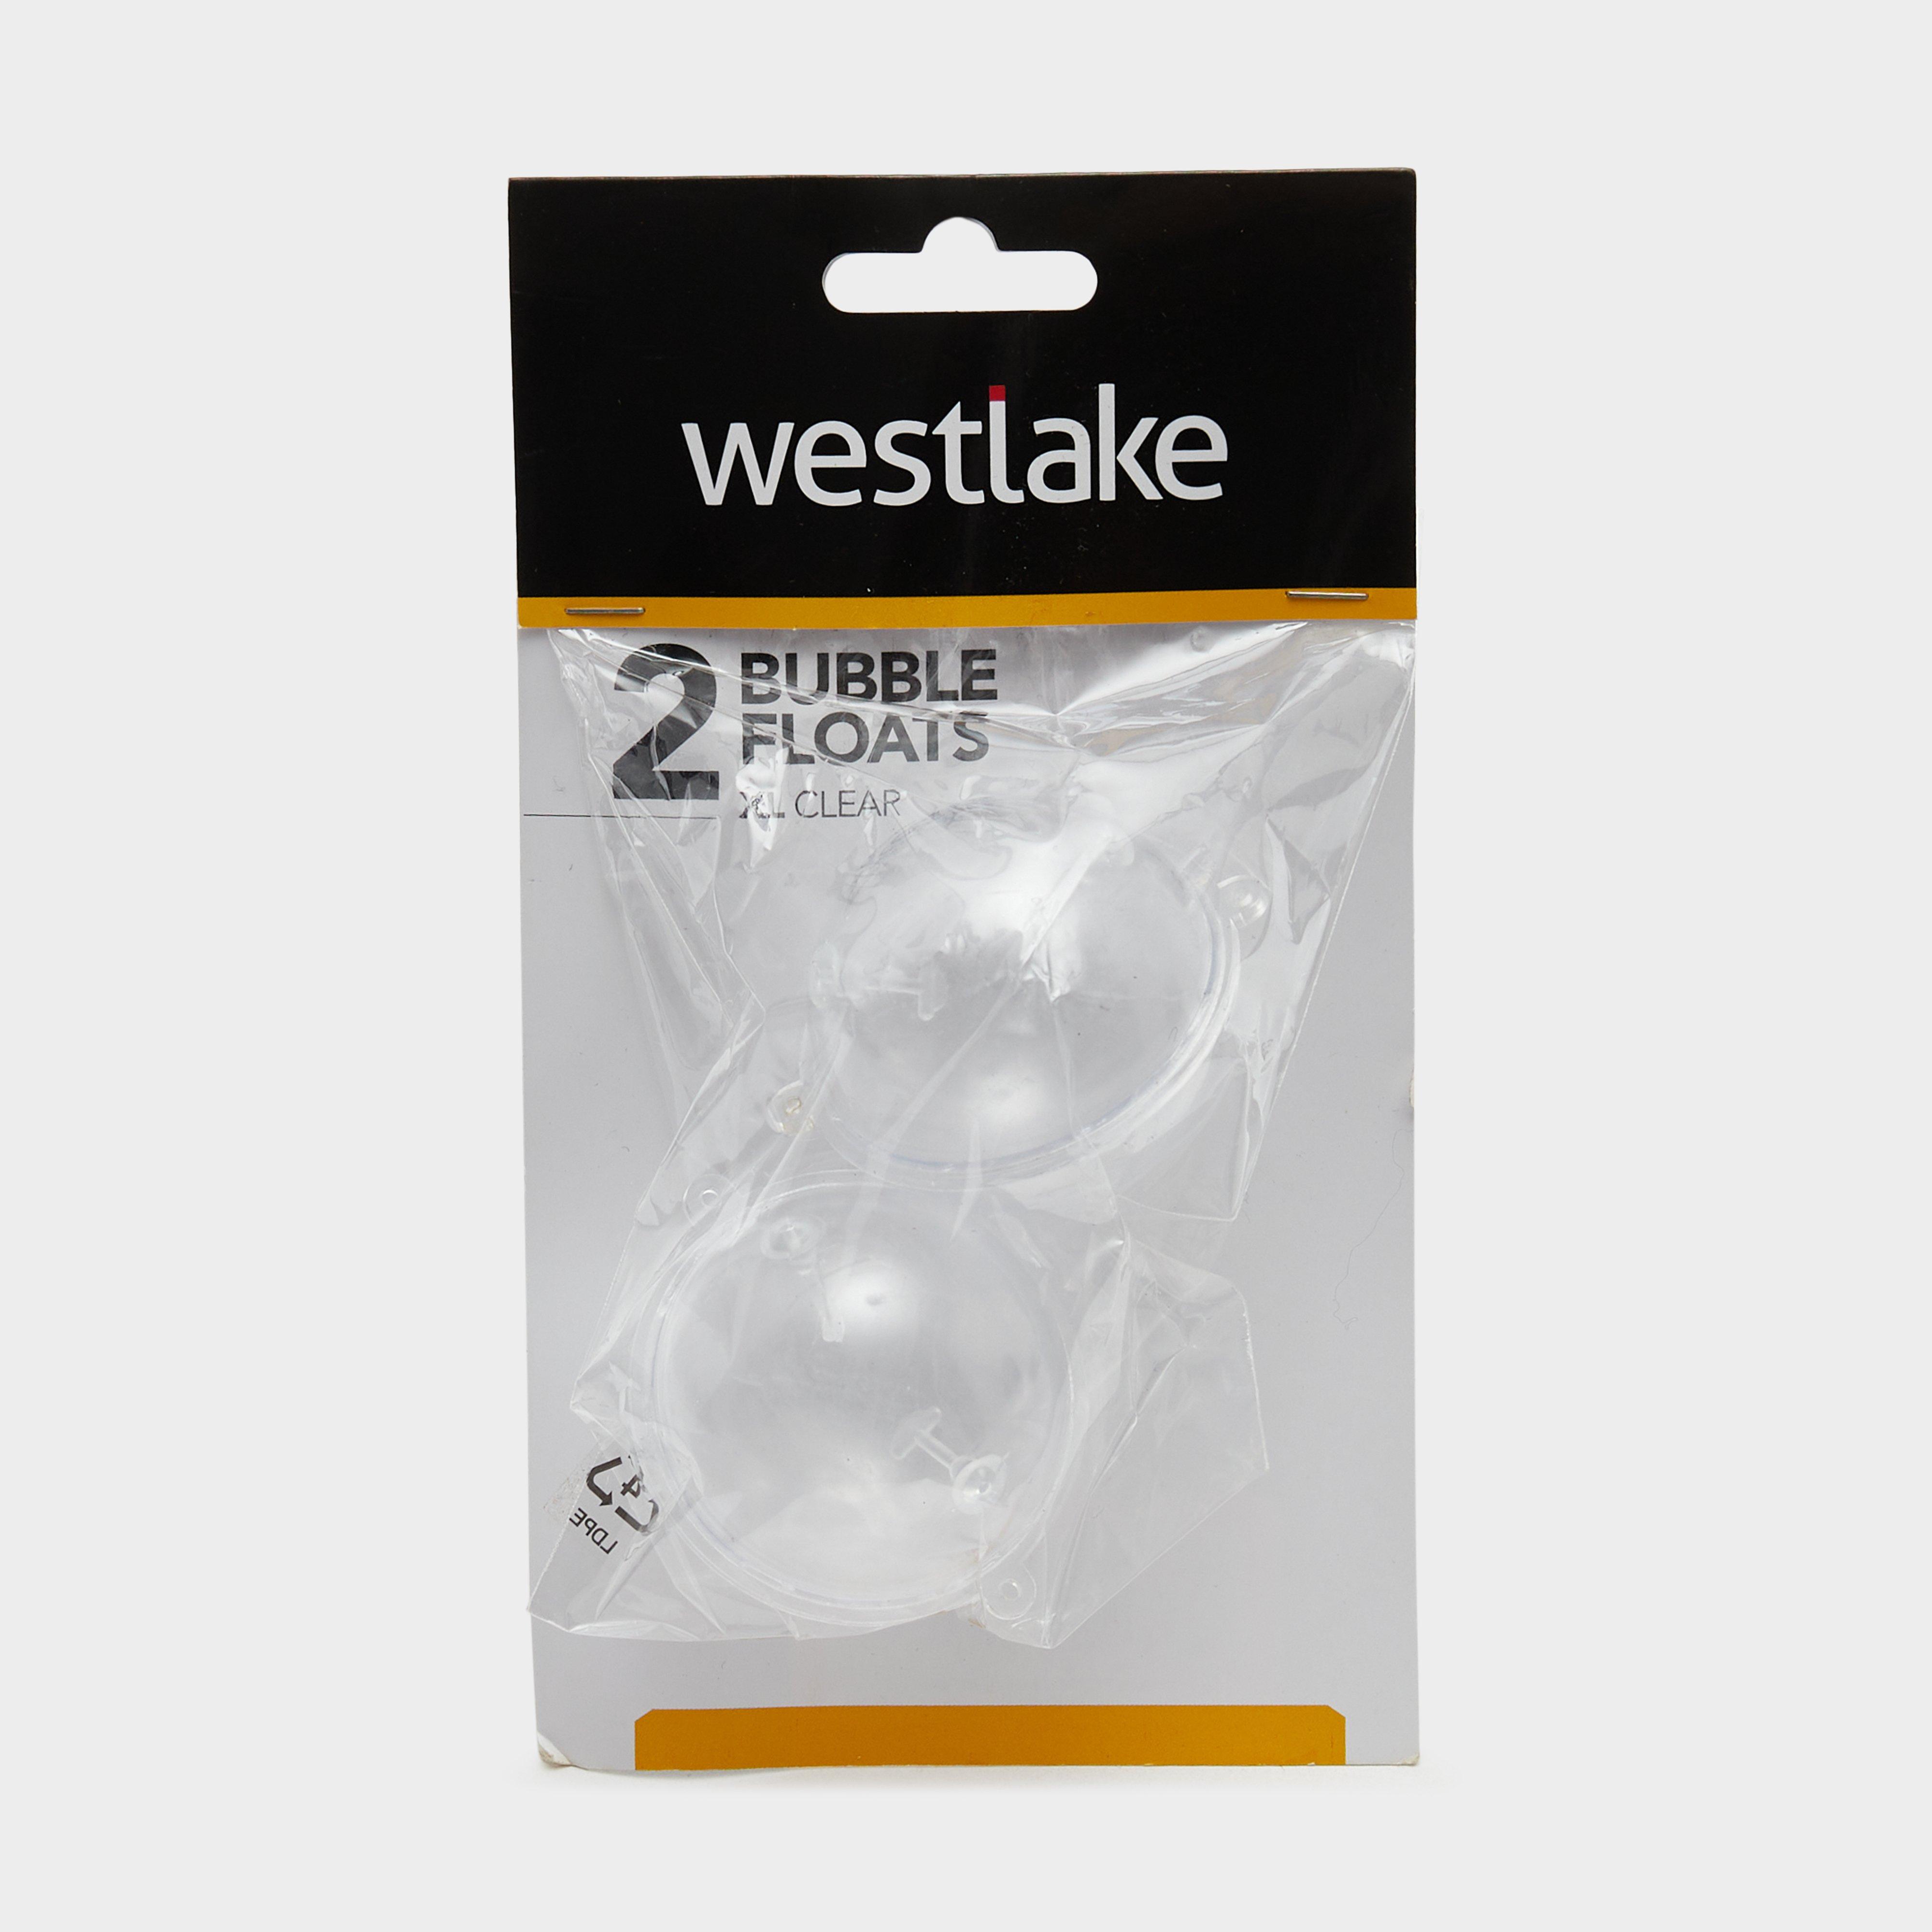 Westlake 2pk Bubble Float Xl Clear - Clear/clear  Clear/clear